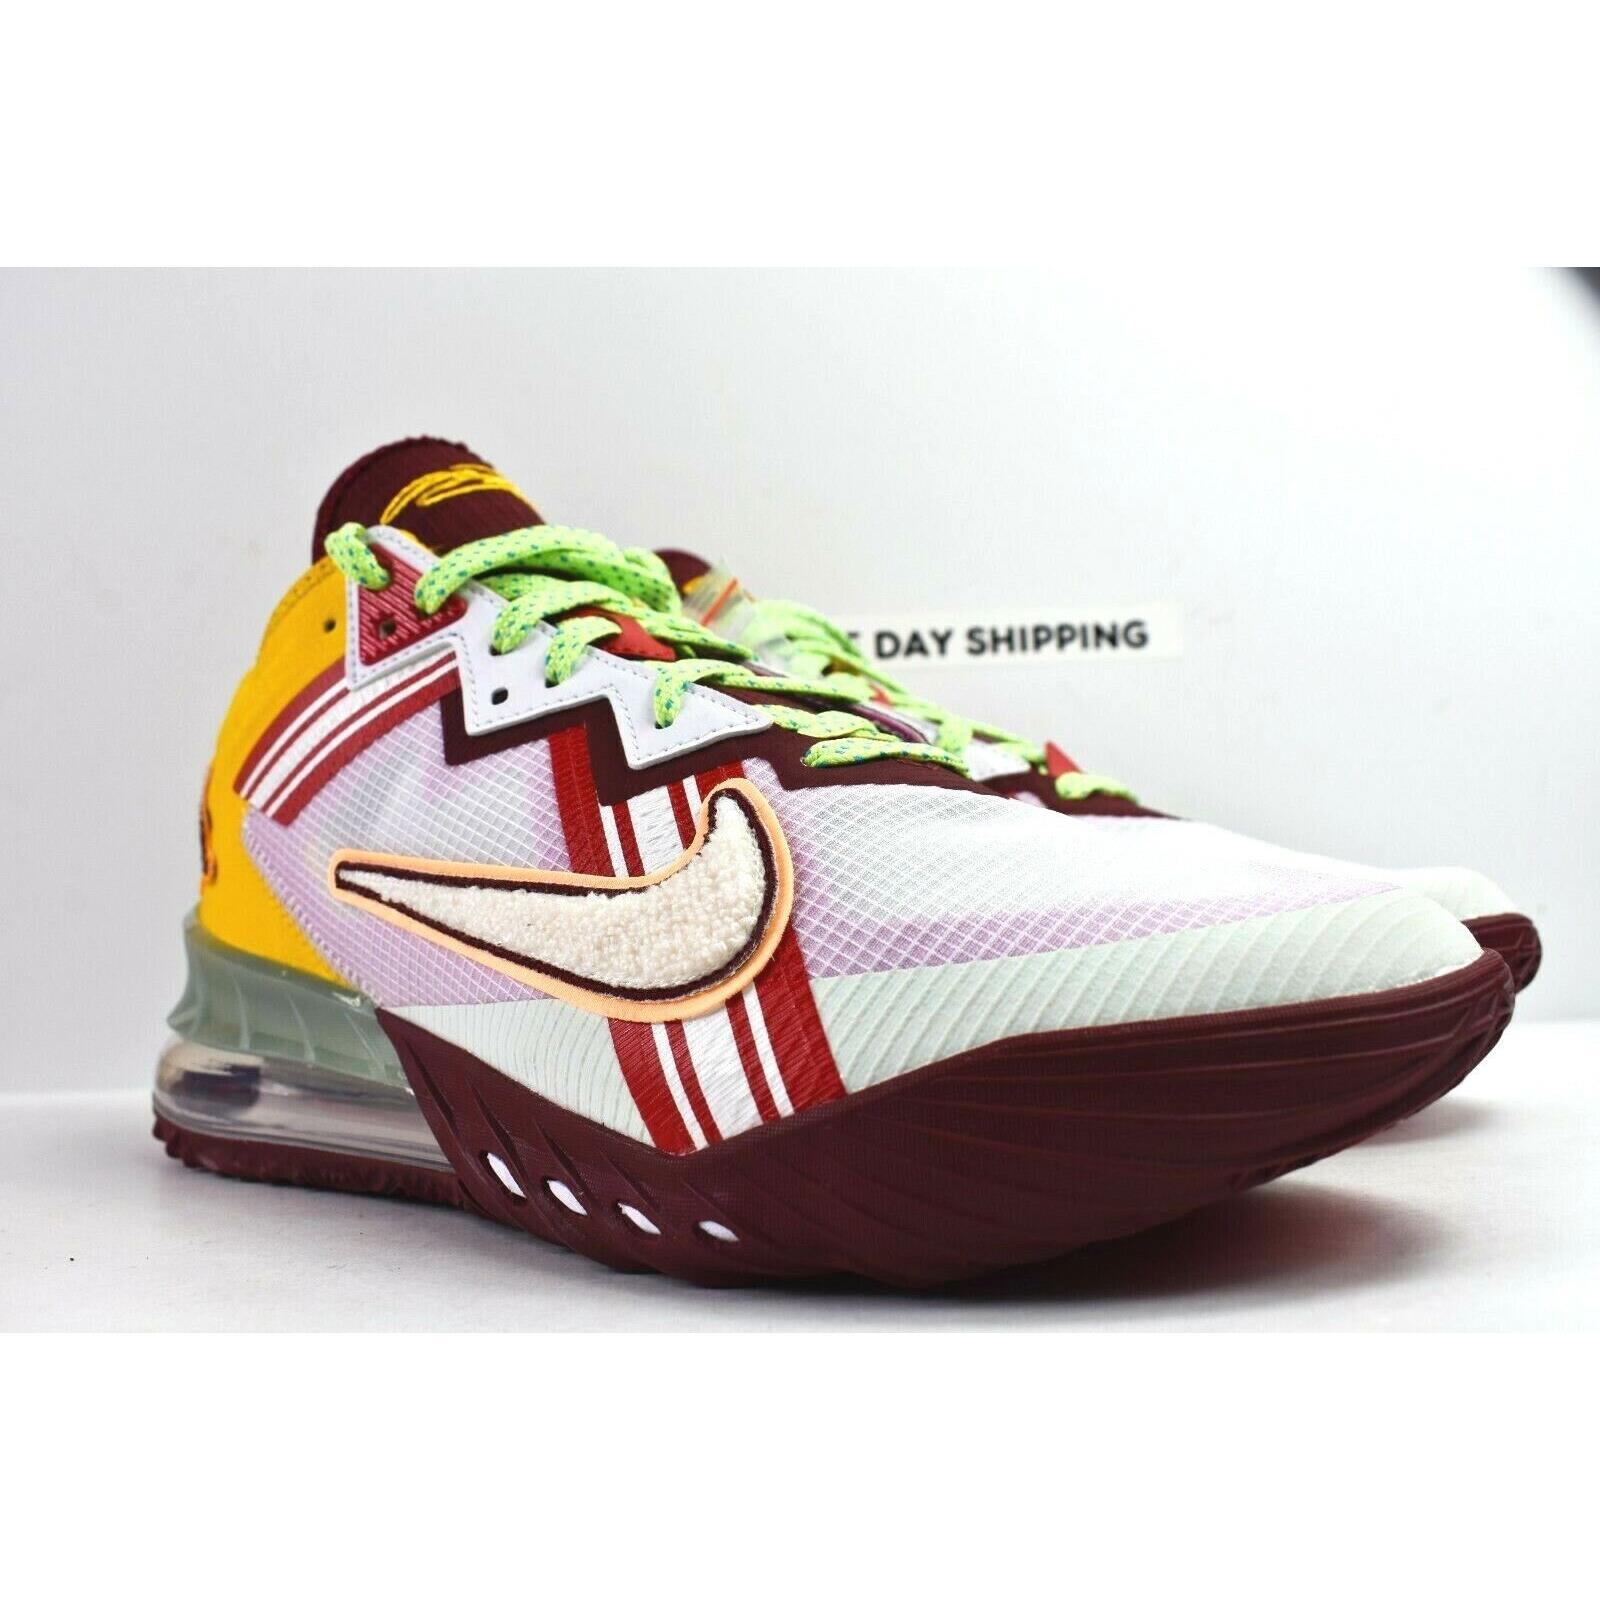 Nike shoes Lebron - Multicolor 0